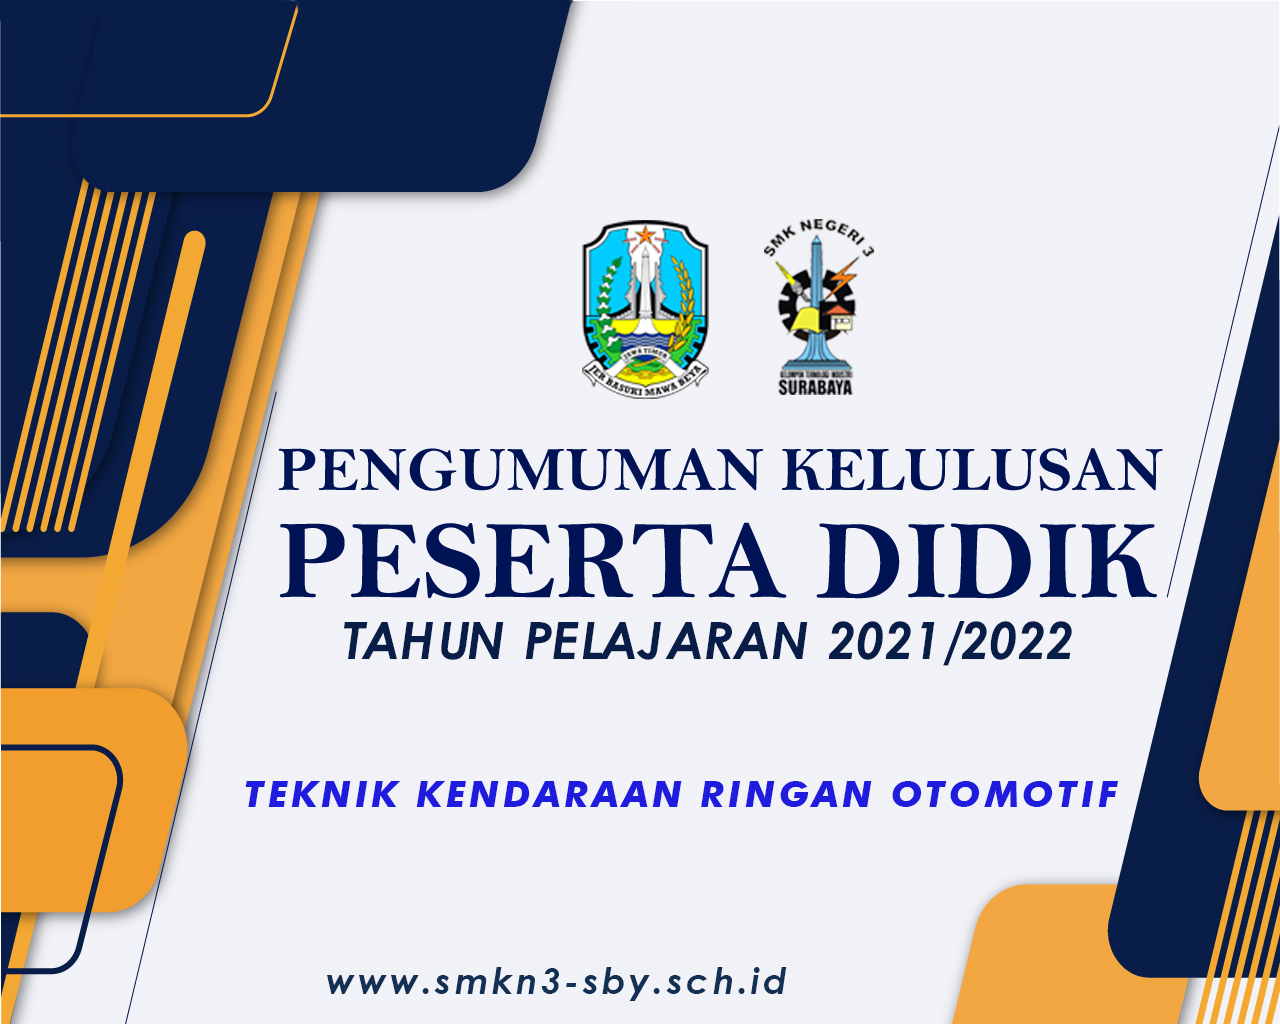 TEKNIK KENDARAAN RINGAN OTOMOTIF 2021/2022